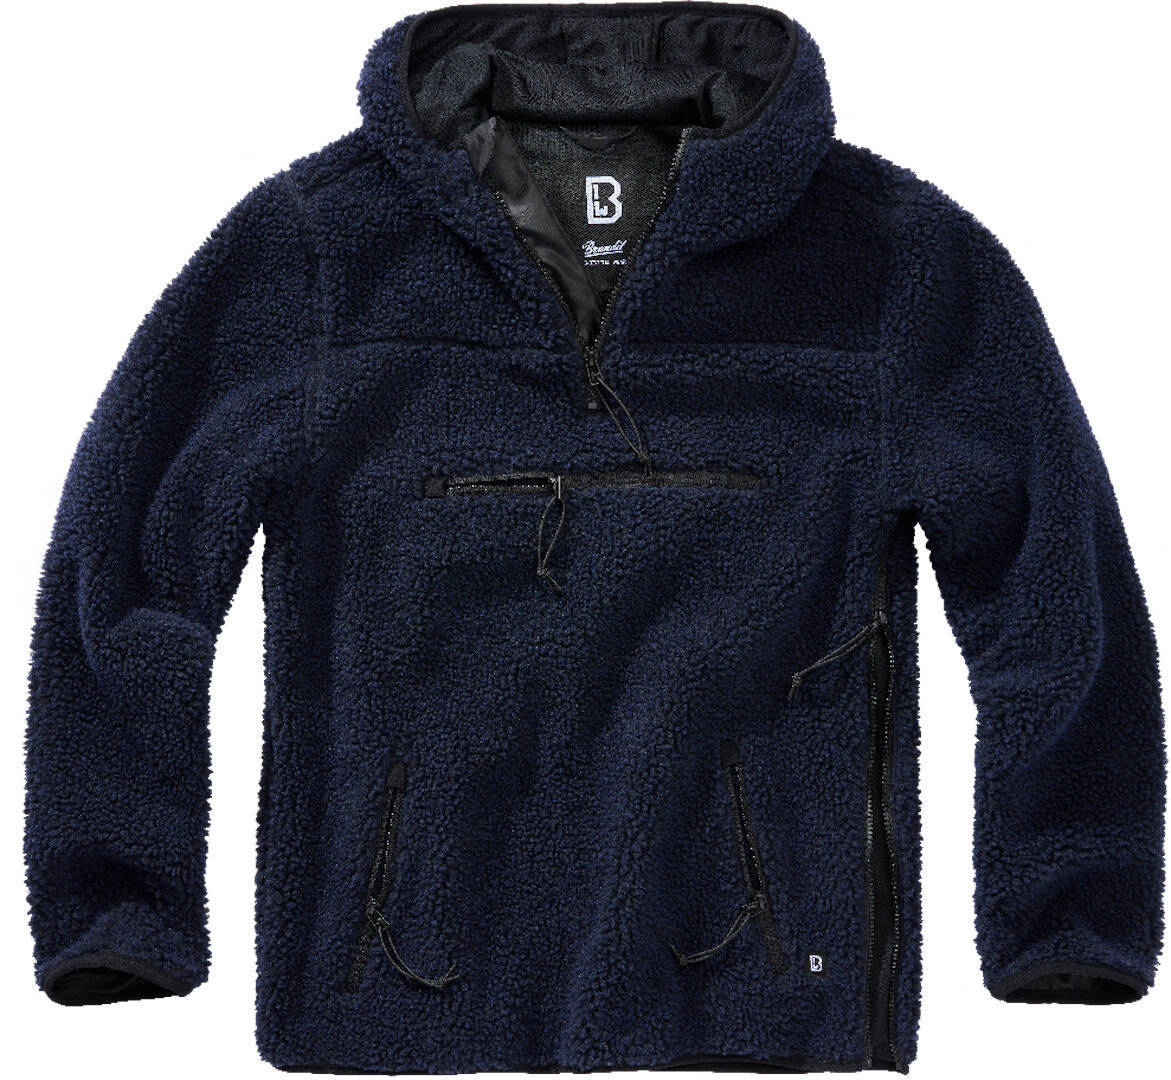 Пуловер Brandit Teddyfleece Worker, темно-синий пуловер мужской inextenso синий